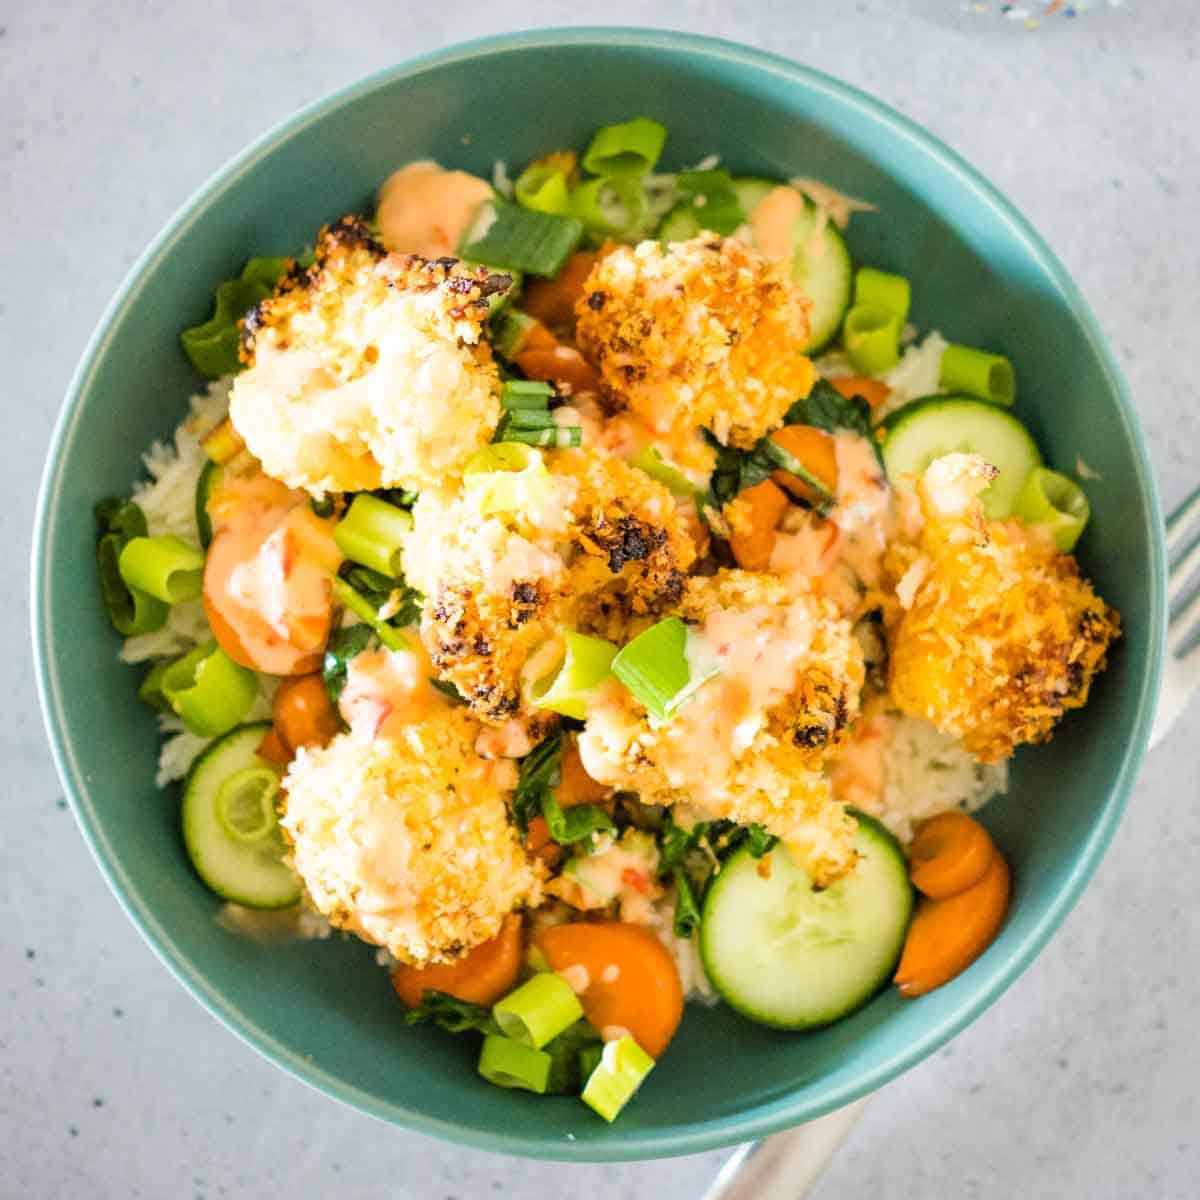 bang bang cauliflower in a bowl with tir fried veggies and rice